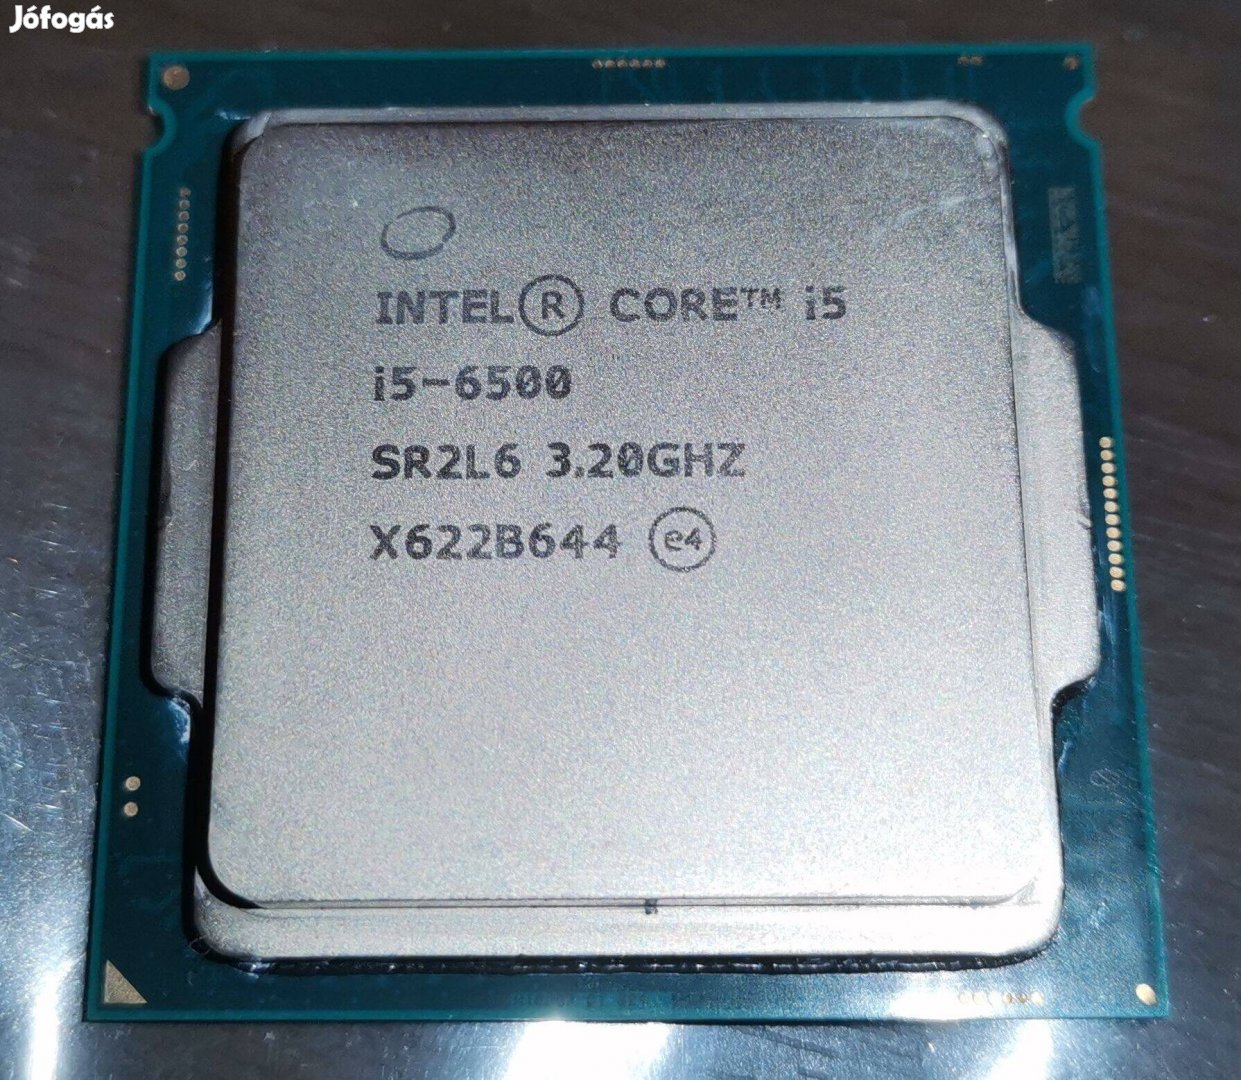 Intel i5 6500 4 magos processzor eladó(hűtővel)!